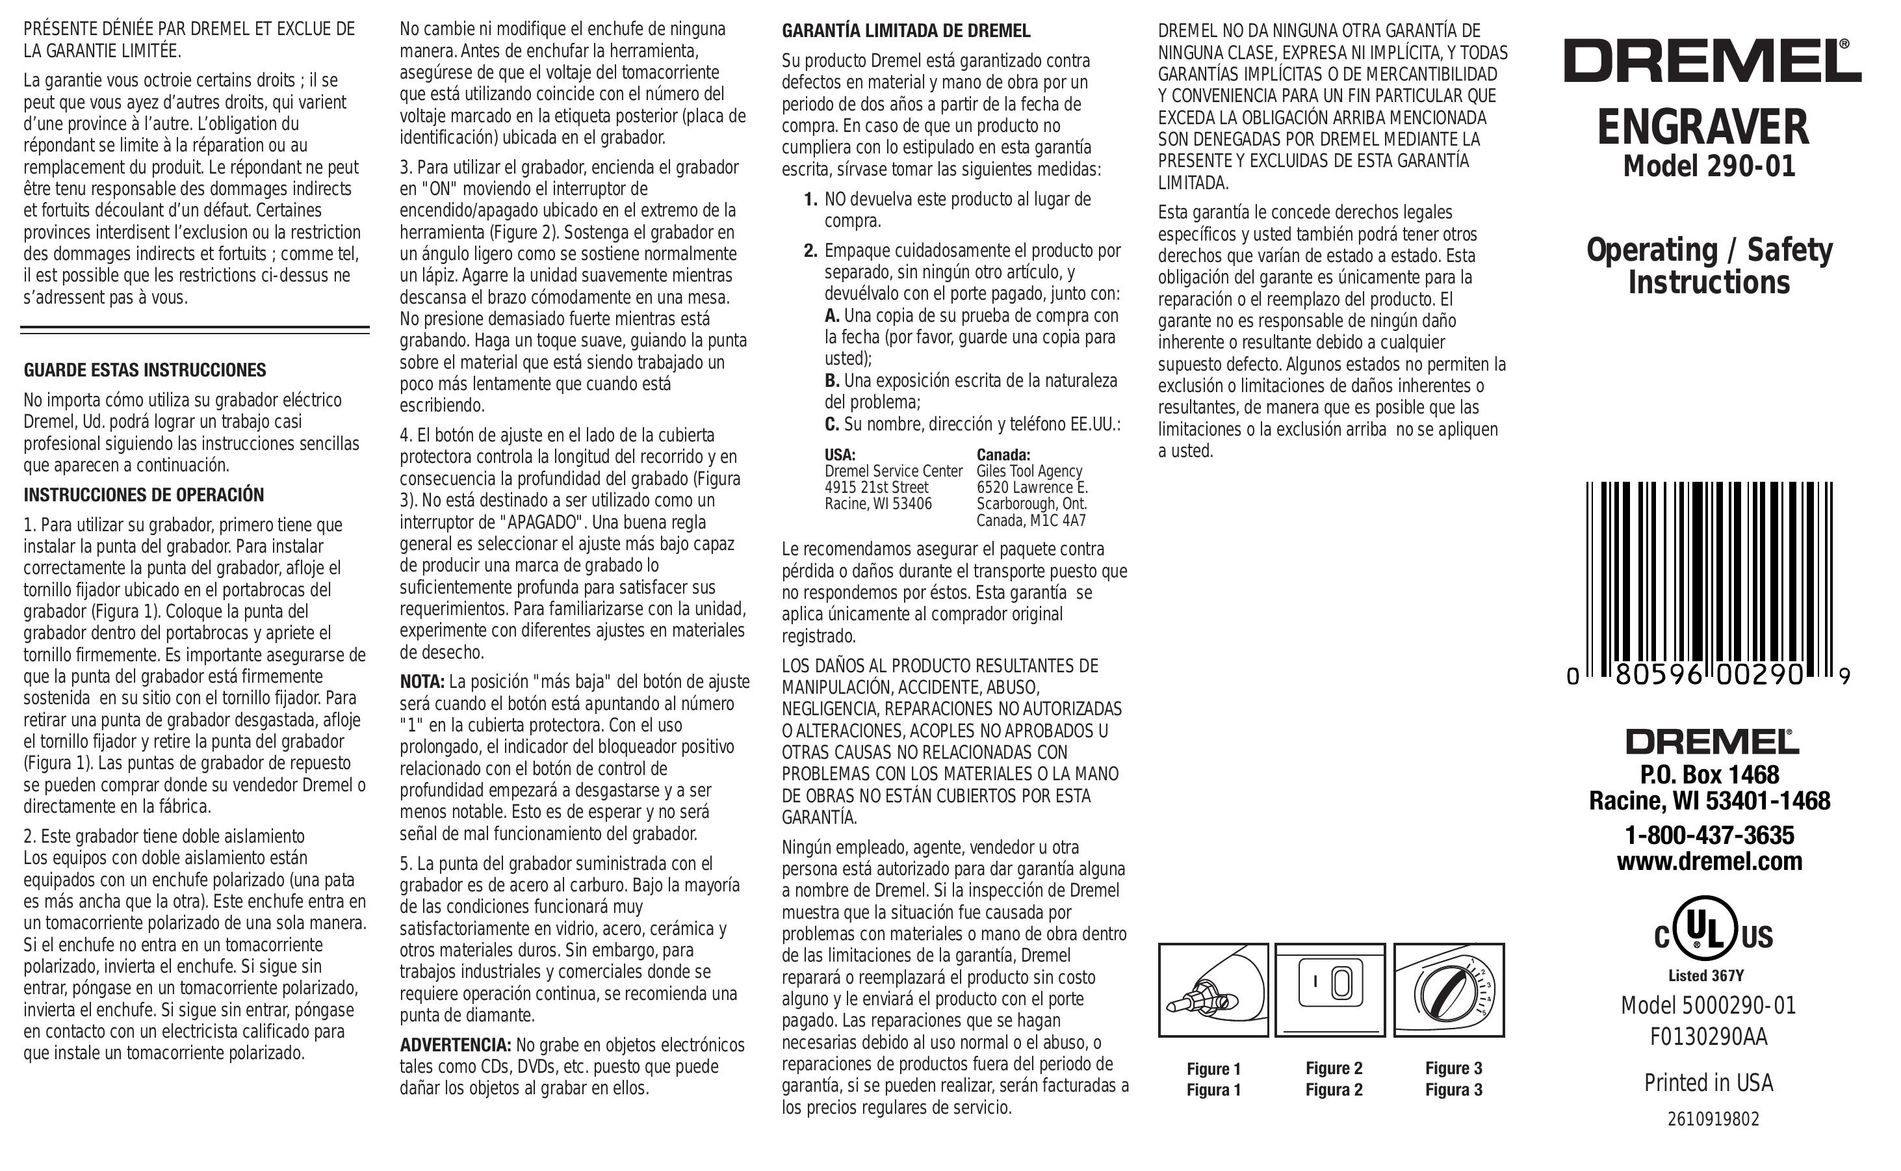 Dremel 290-01 Engraver User Manual